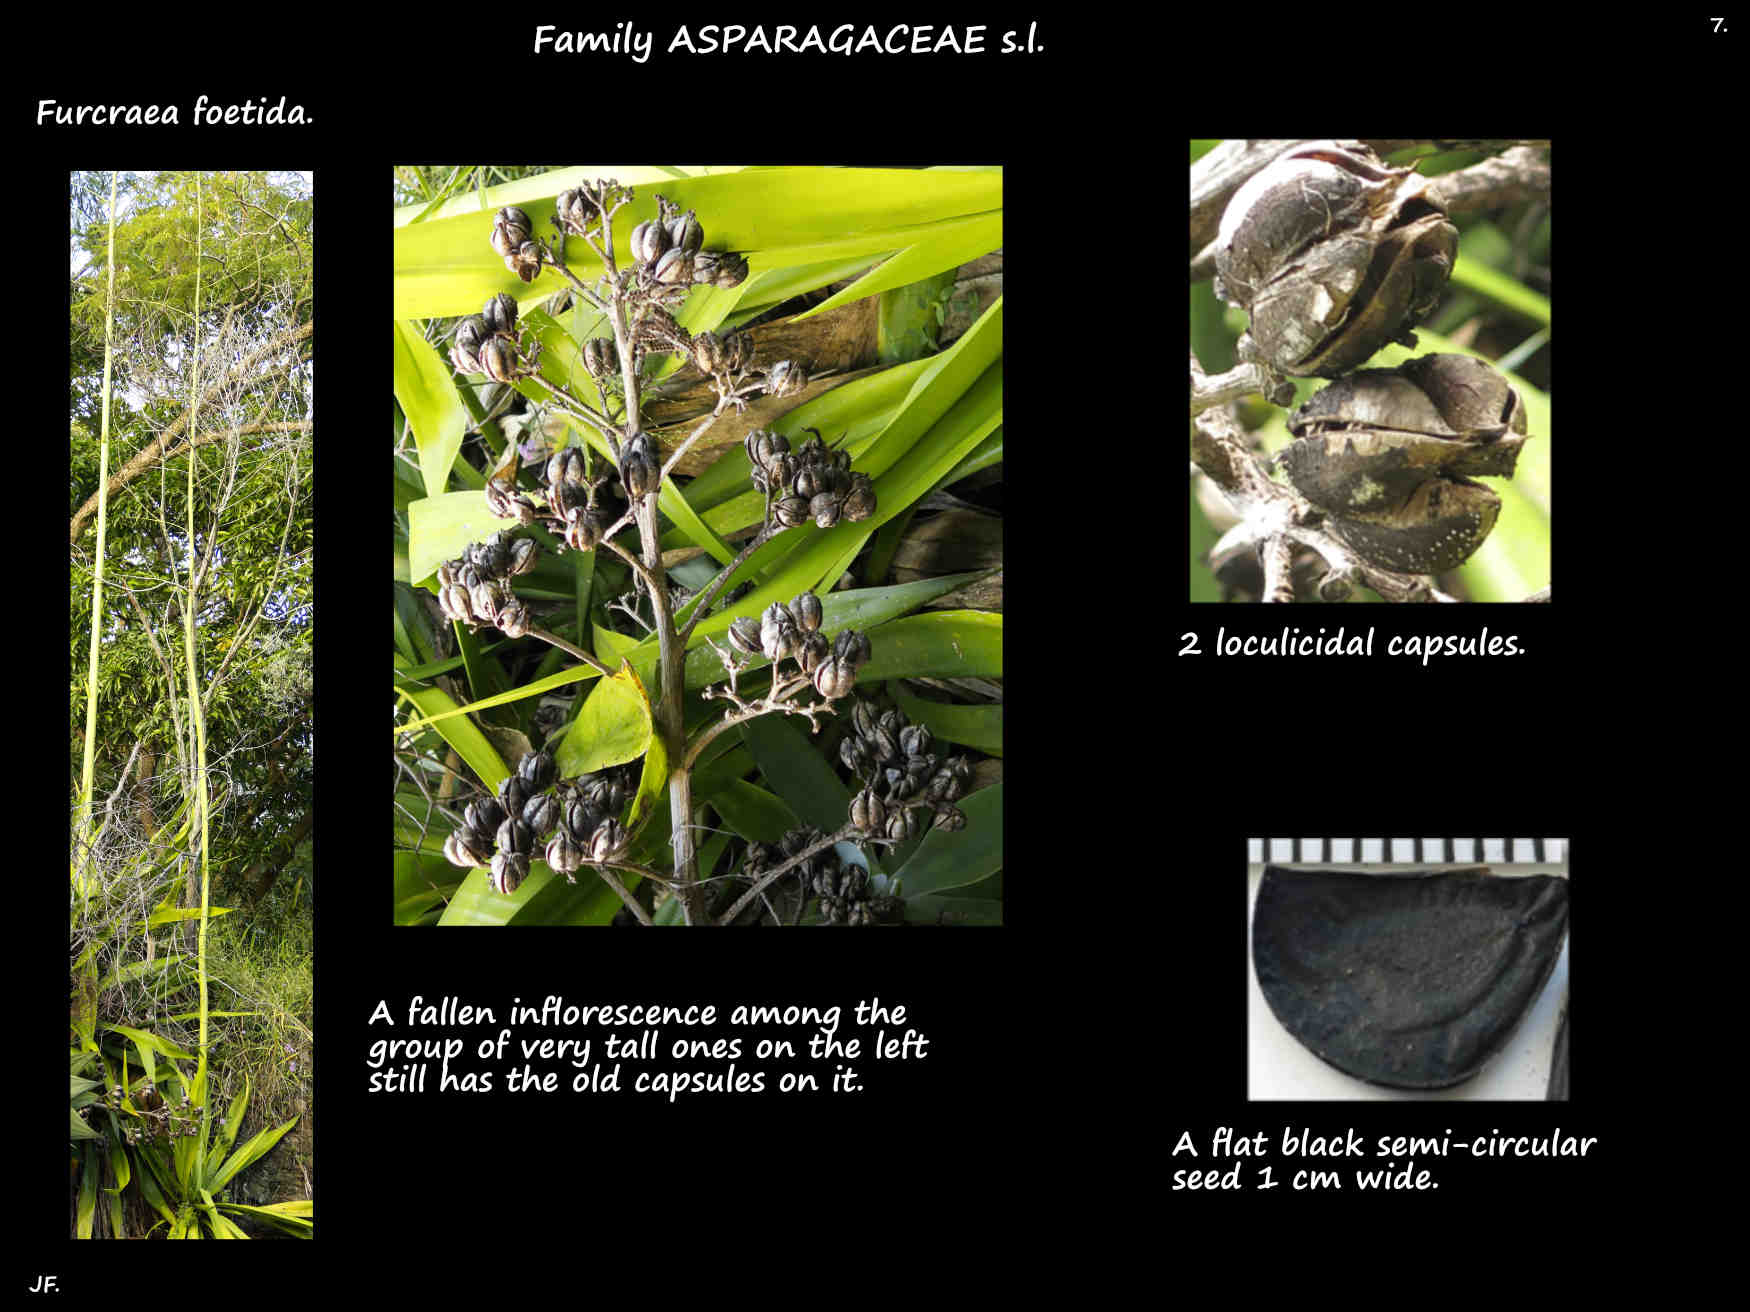 7 Furcraea foetida capsules & seeds